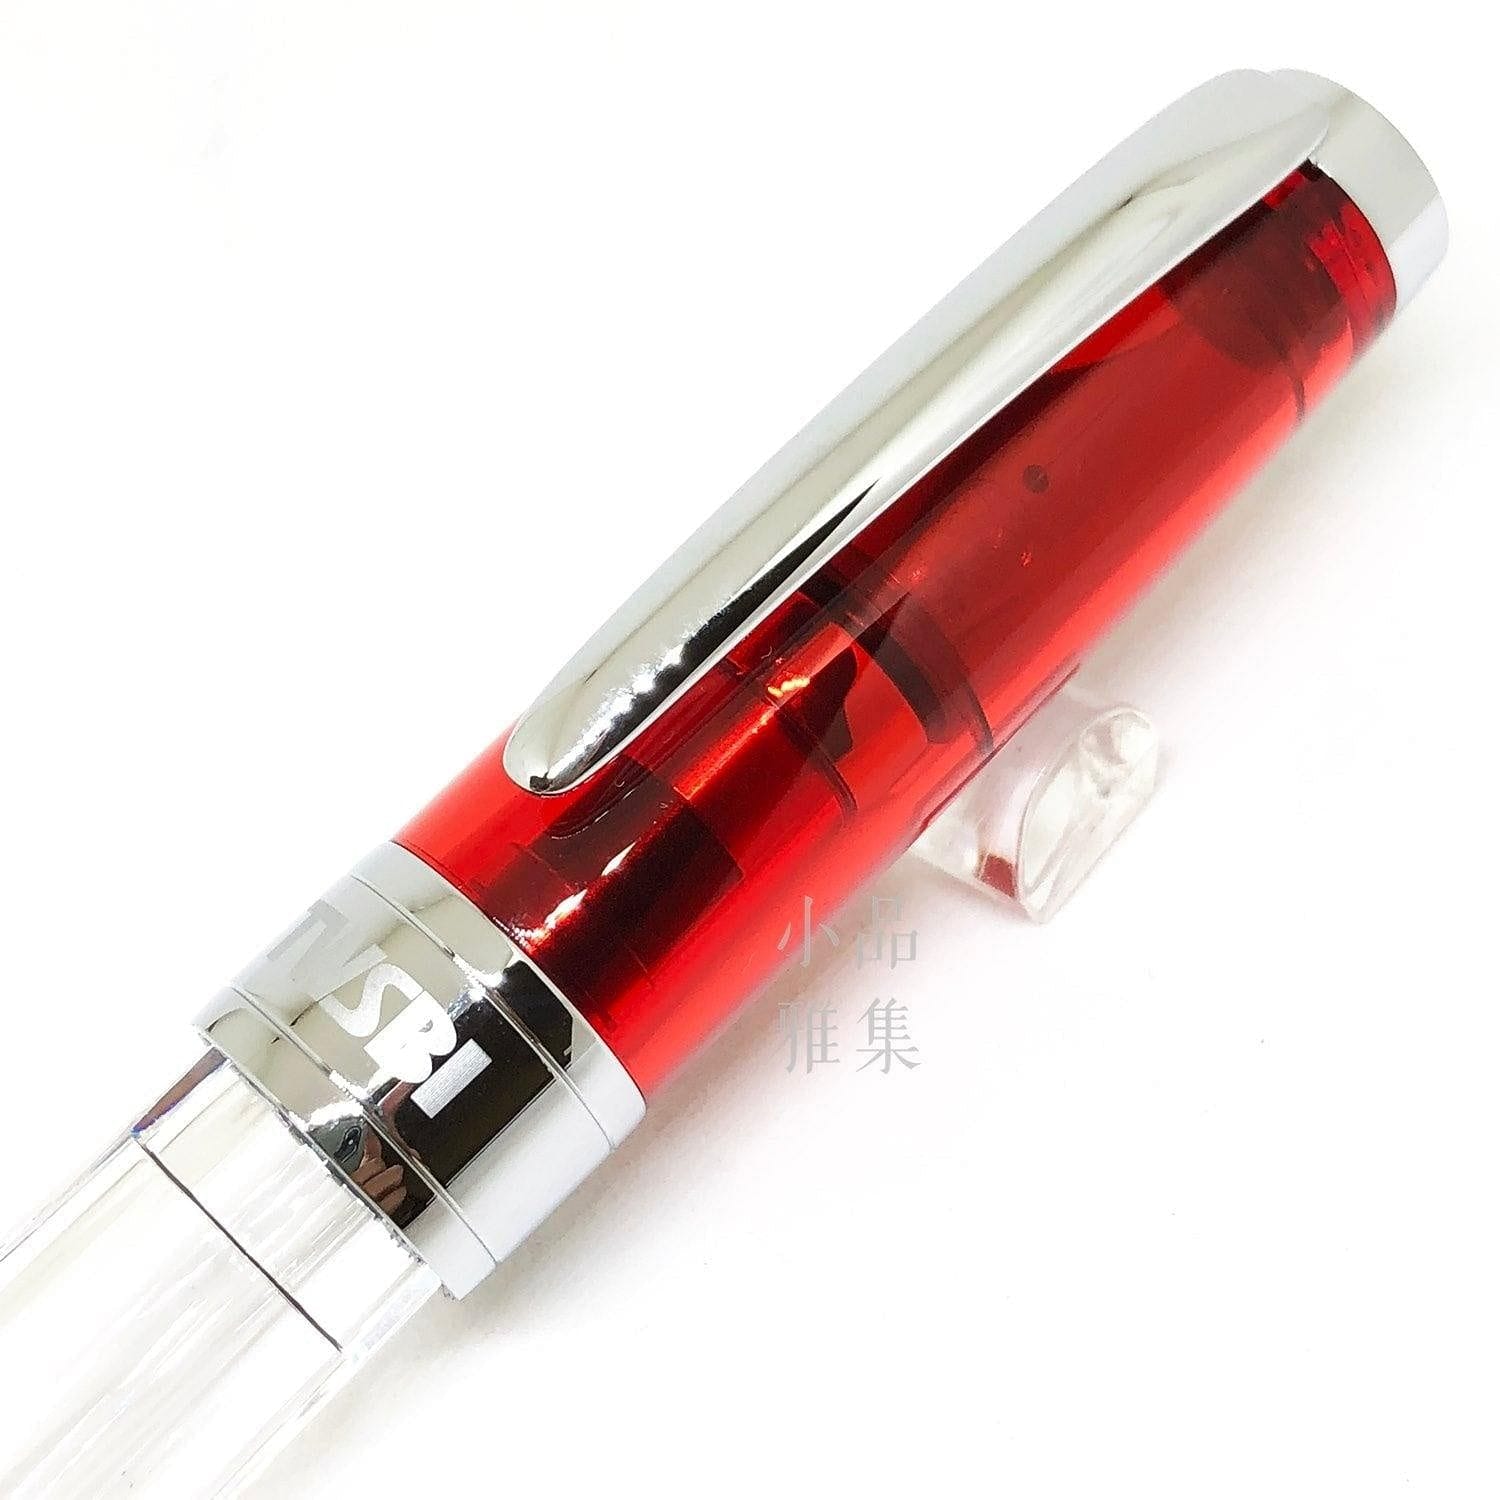 TWSBI Fountain Pen Diamond 580 RBT Ruby Red, The Beauty of The